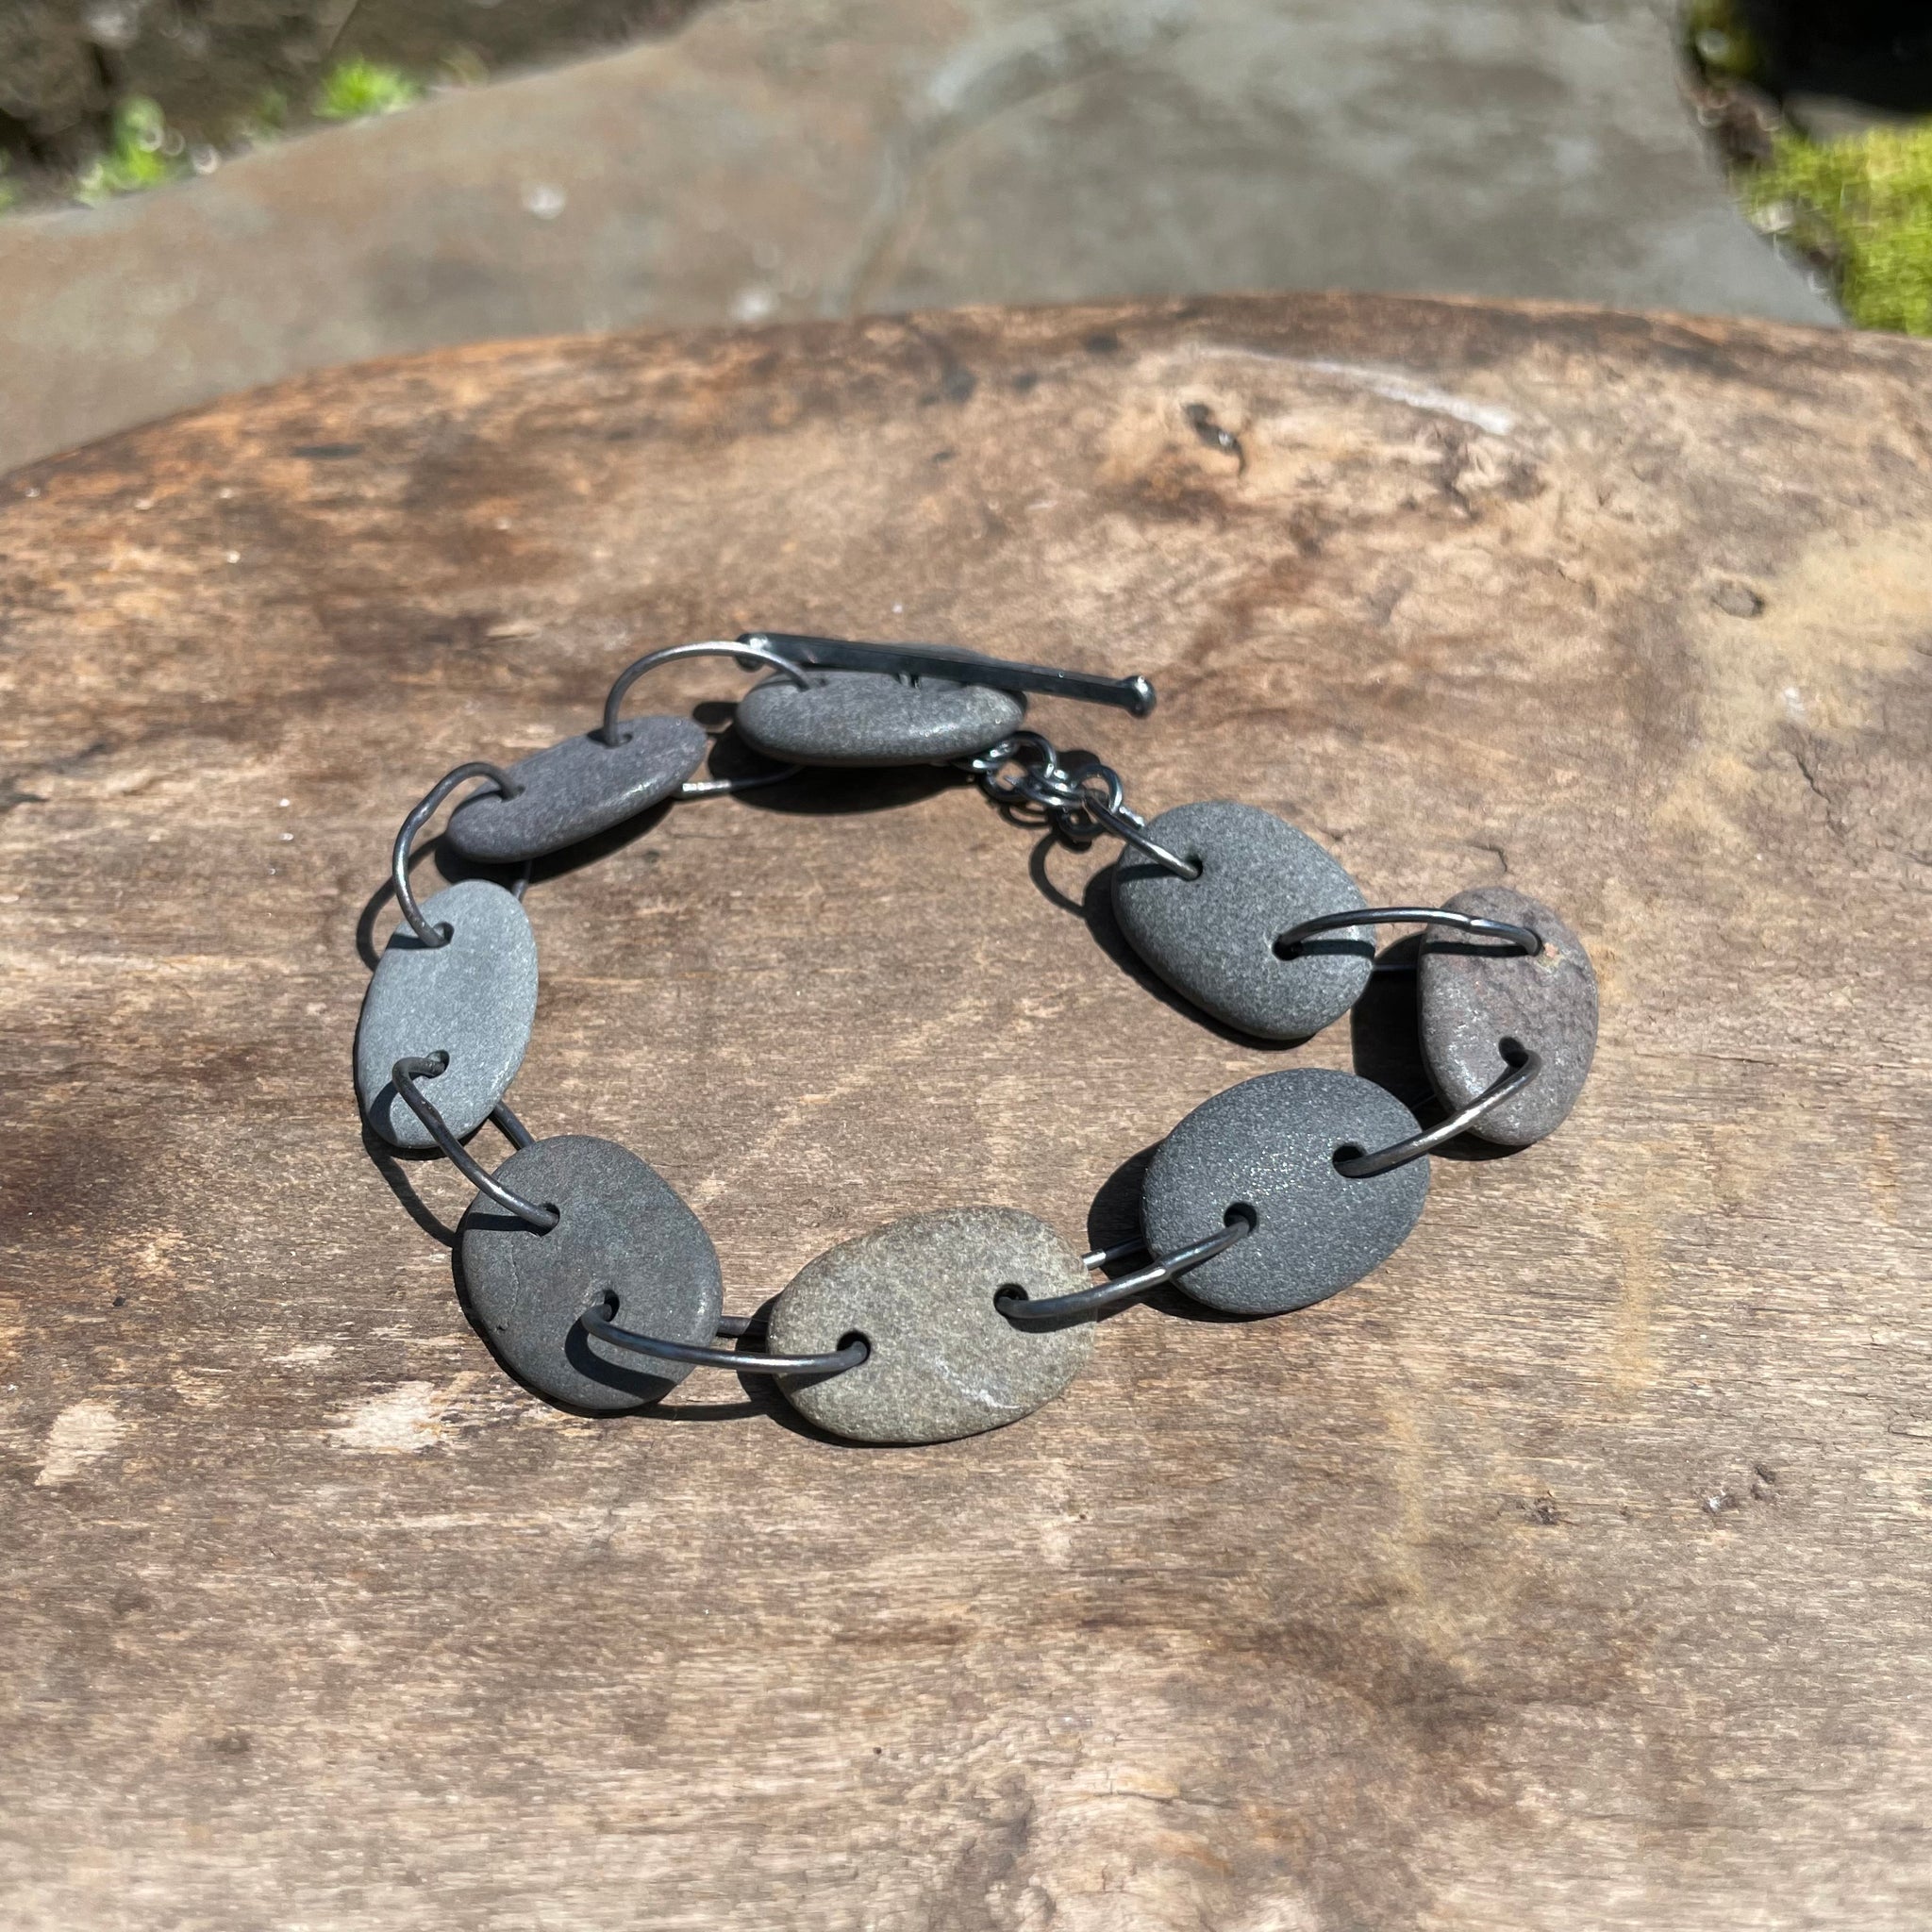 Double Drilled Stone Bracelet by Lakestone Jewelry